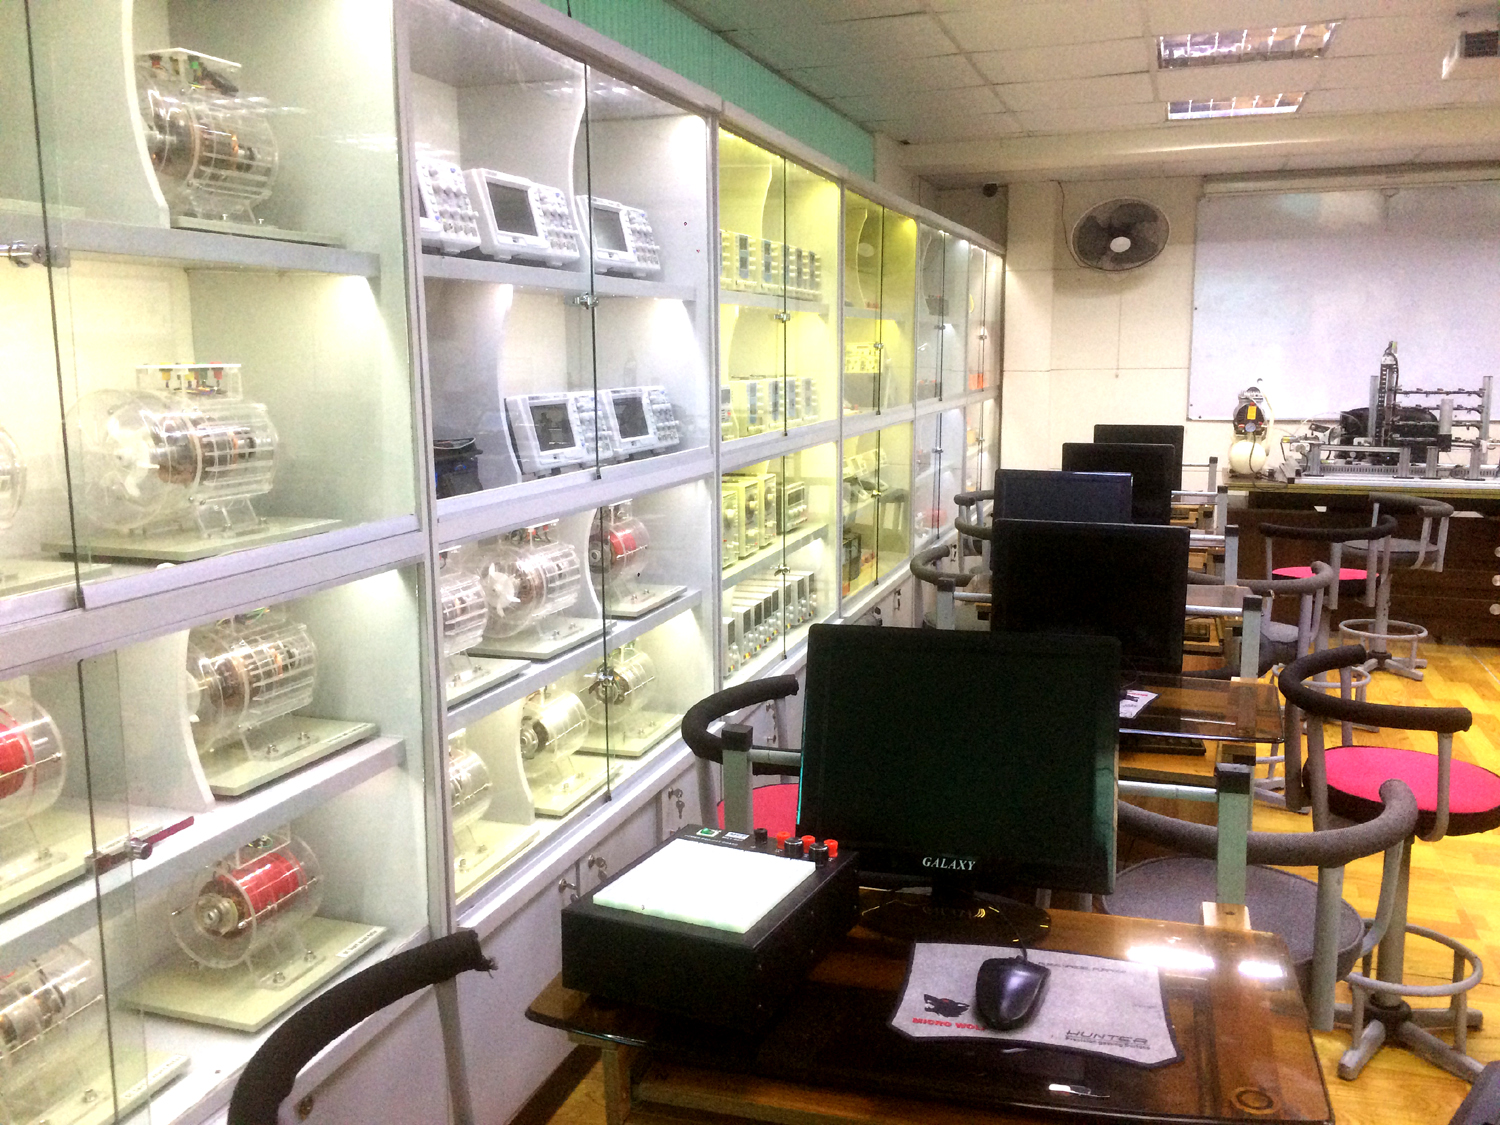 Electrical & Electronics Lab